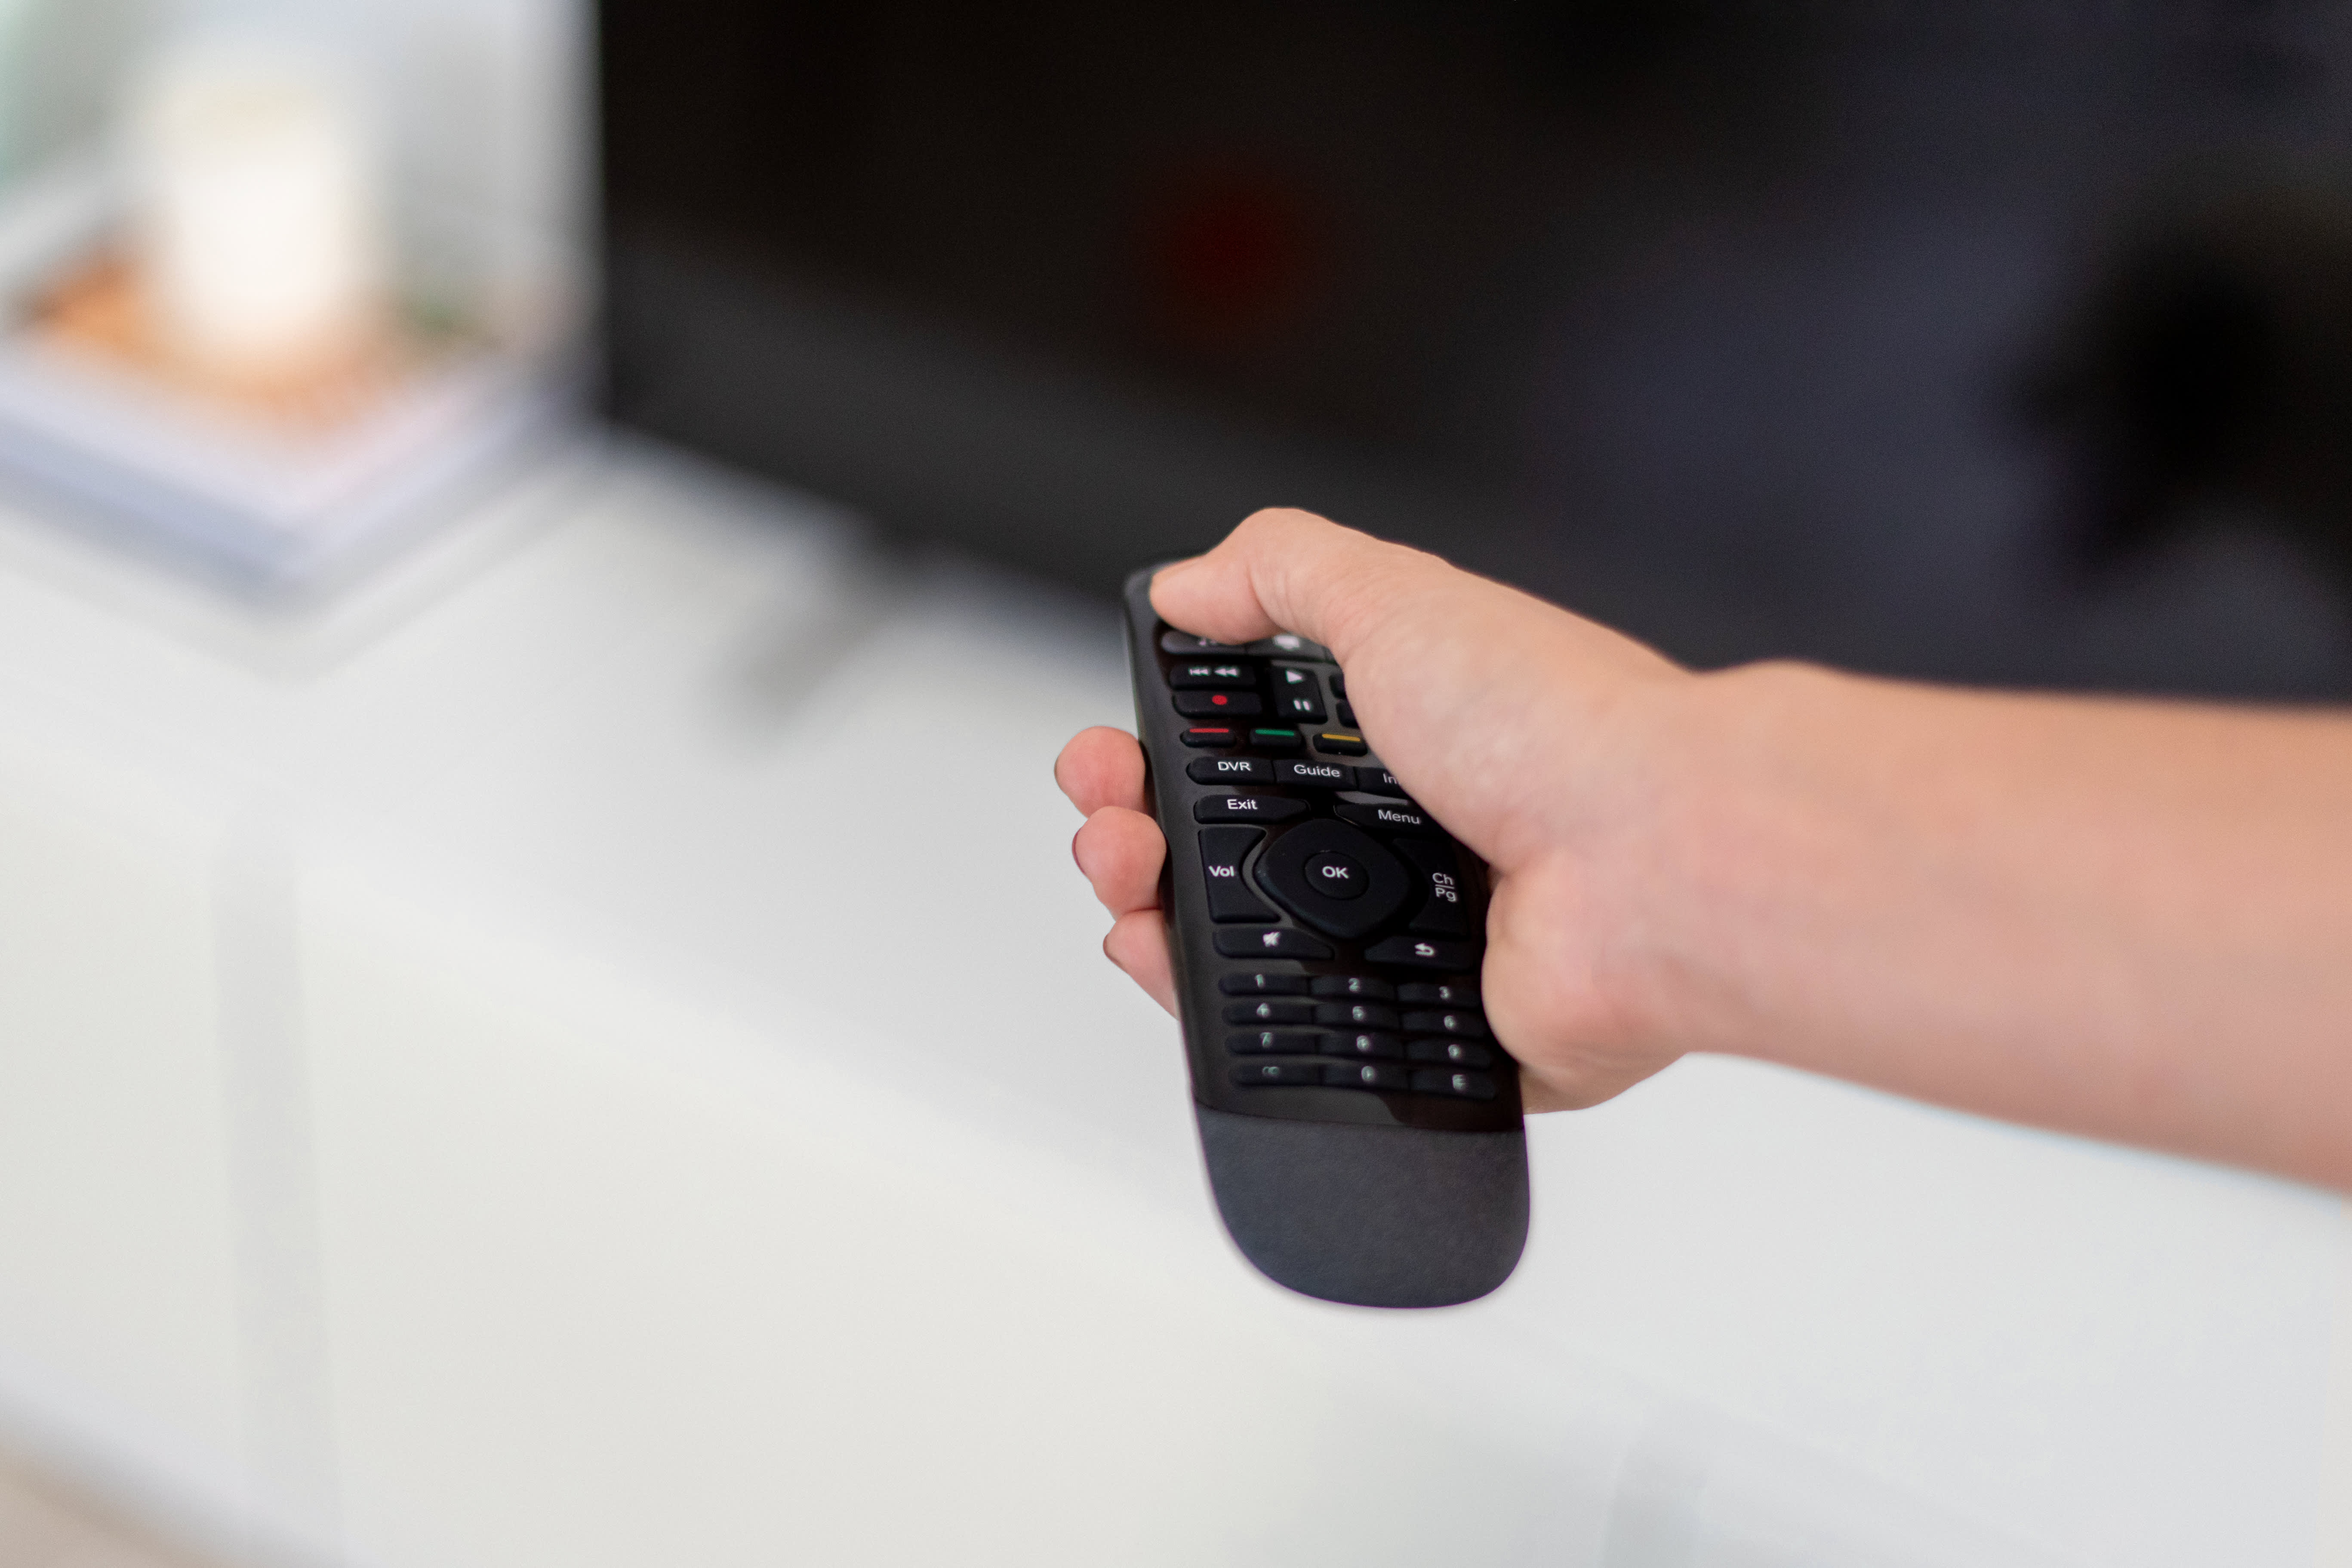 Почистить пульт от телевизора в домашних условиях